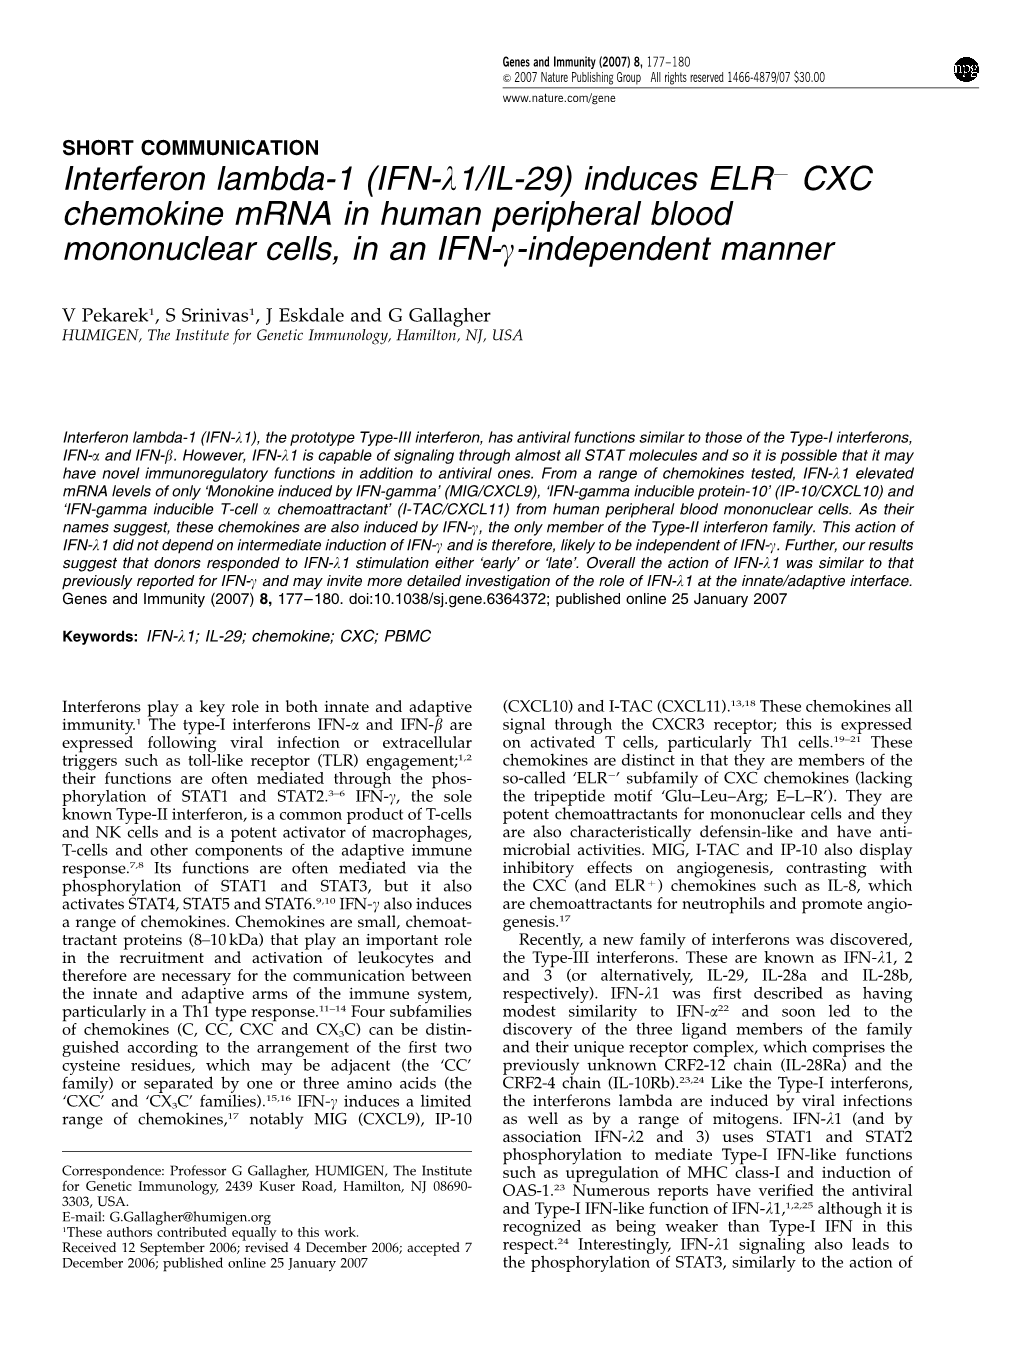 Interferon Lambda-1 (IFN-L1/IL-29) Induces ELRА CXC Chemokine